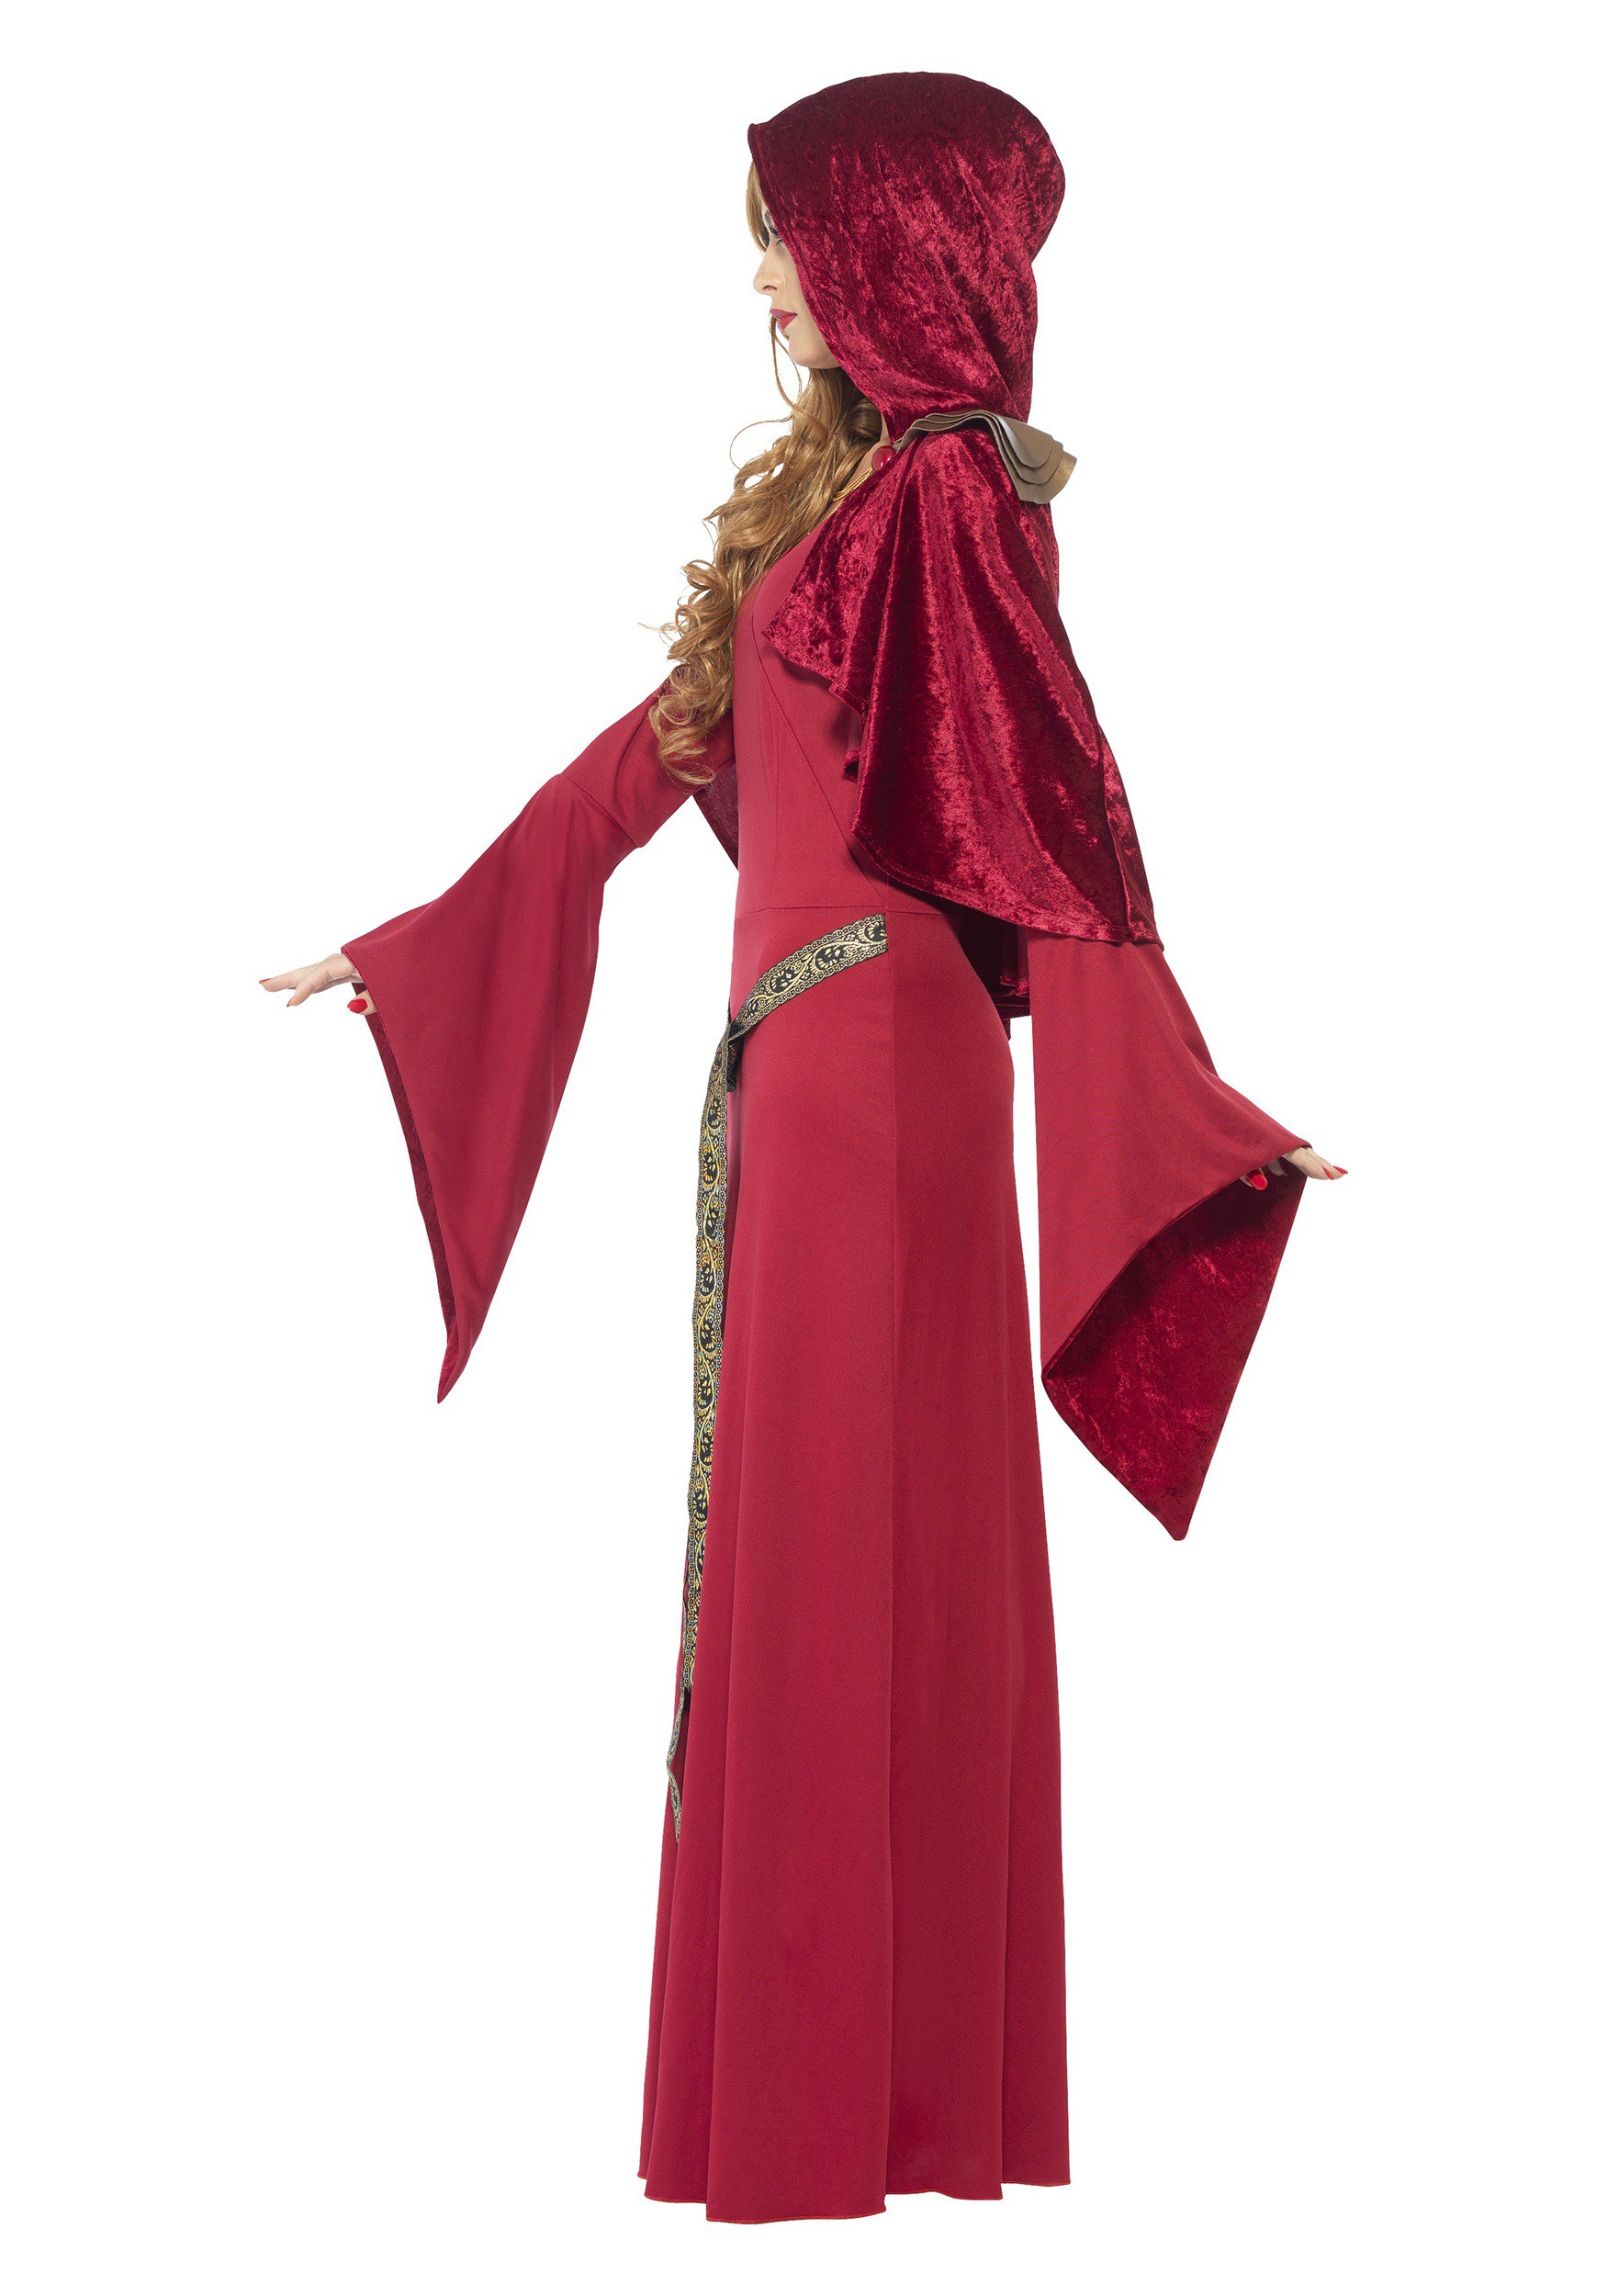 Red High Priestess Women's Costume